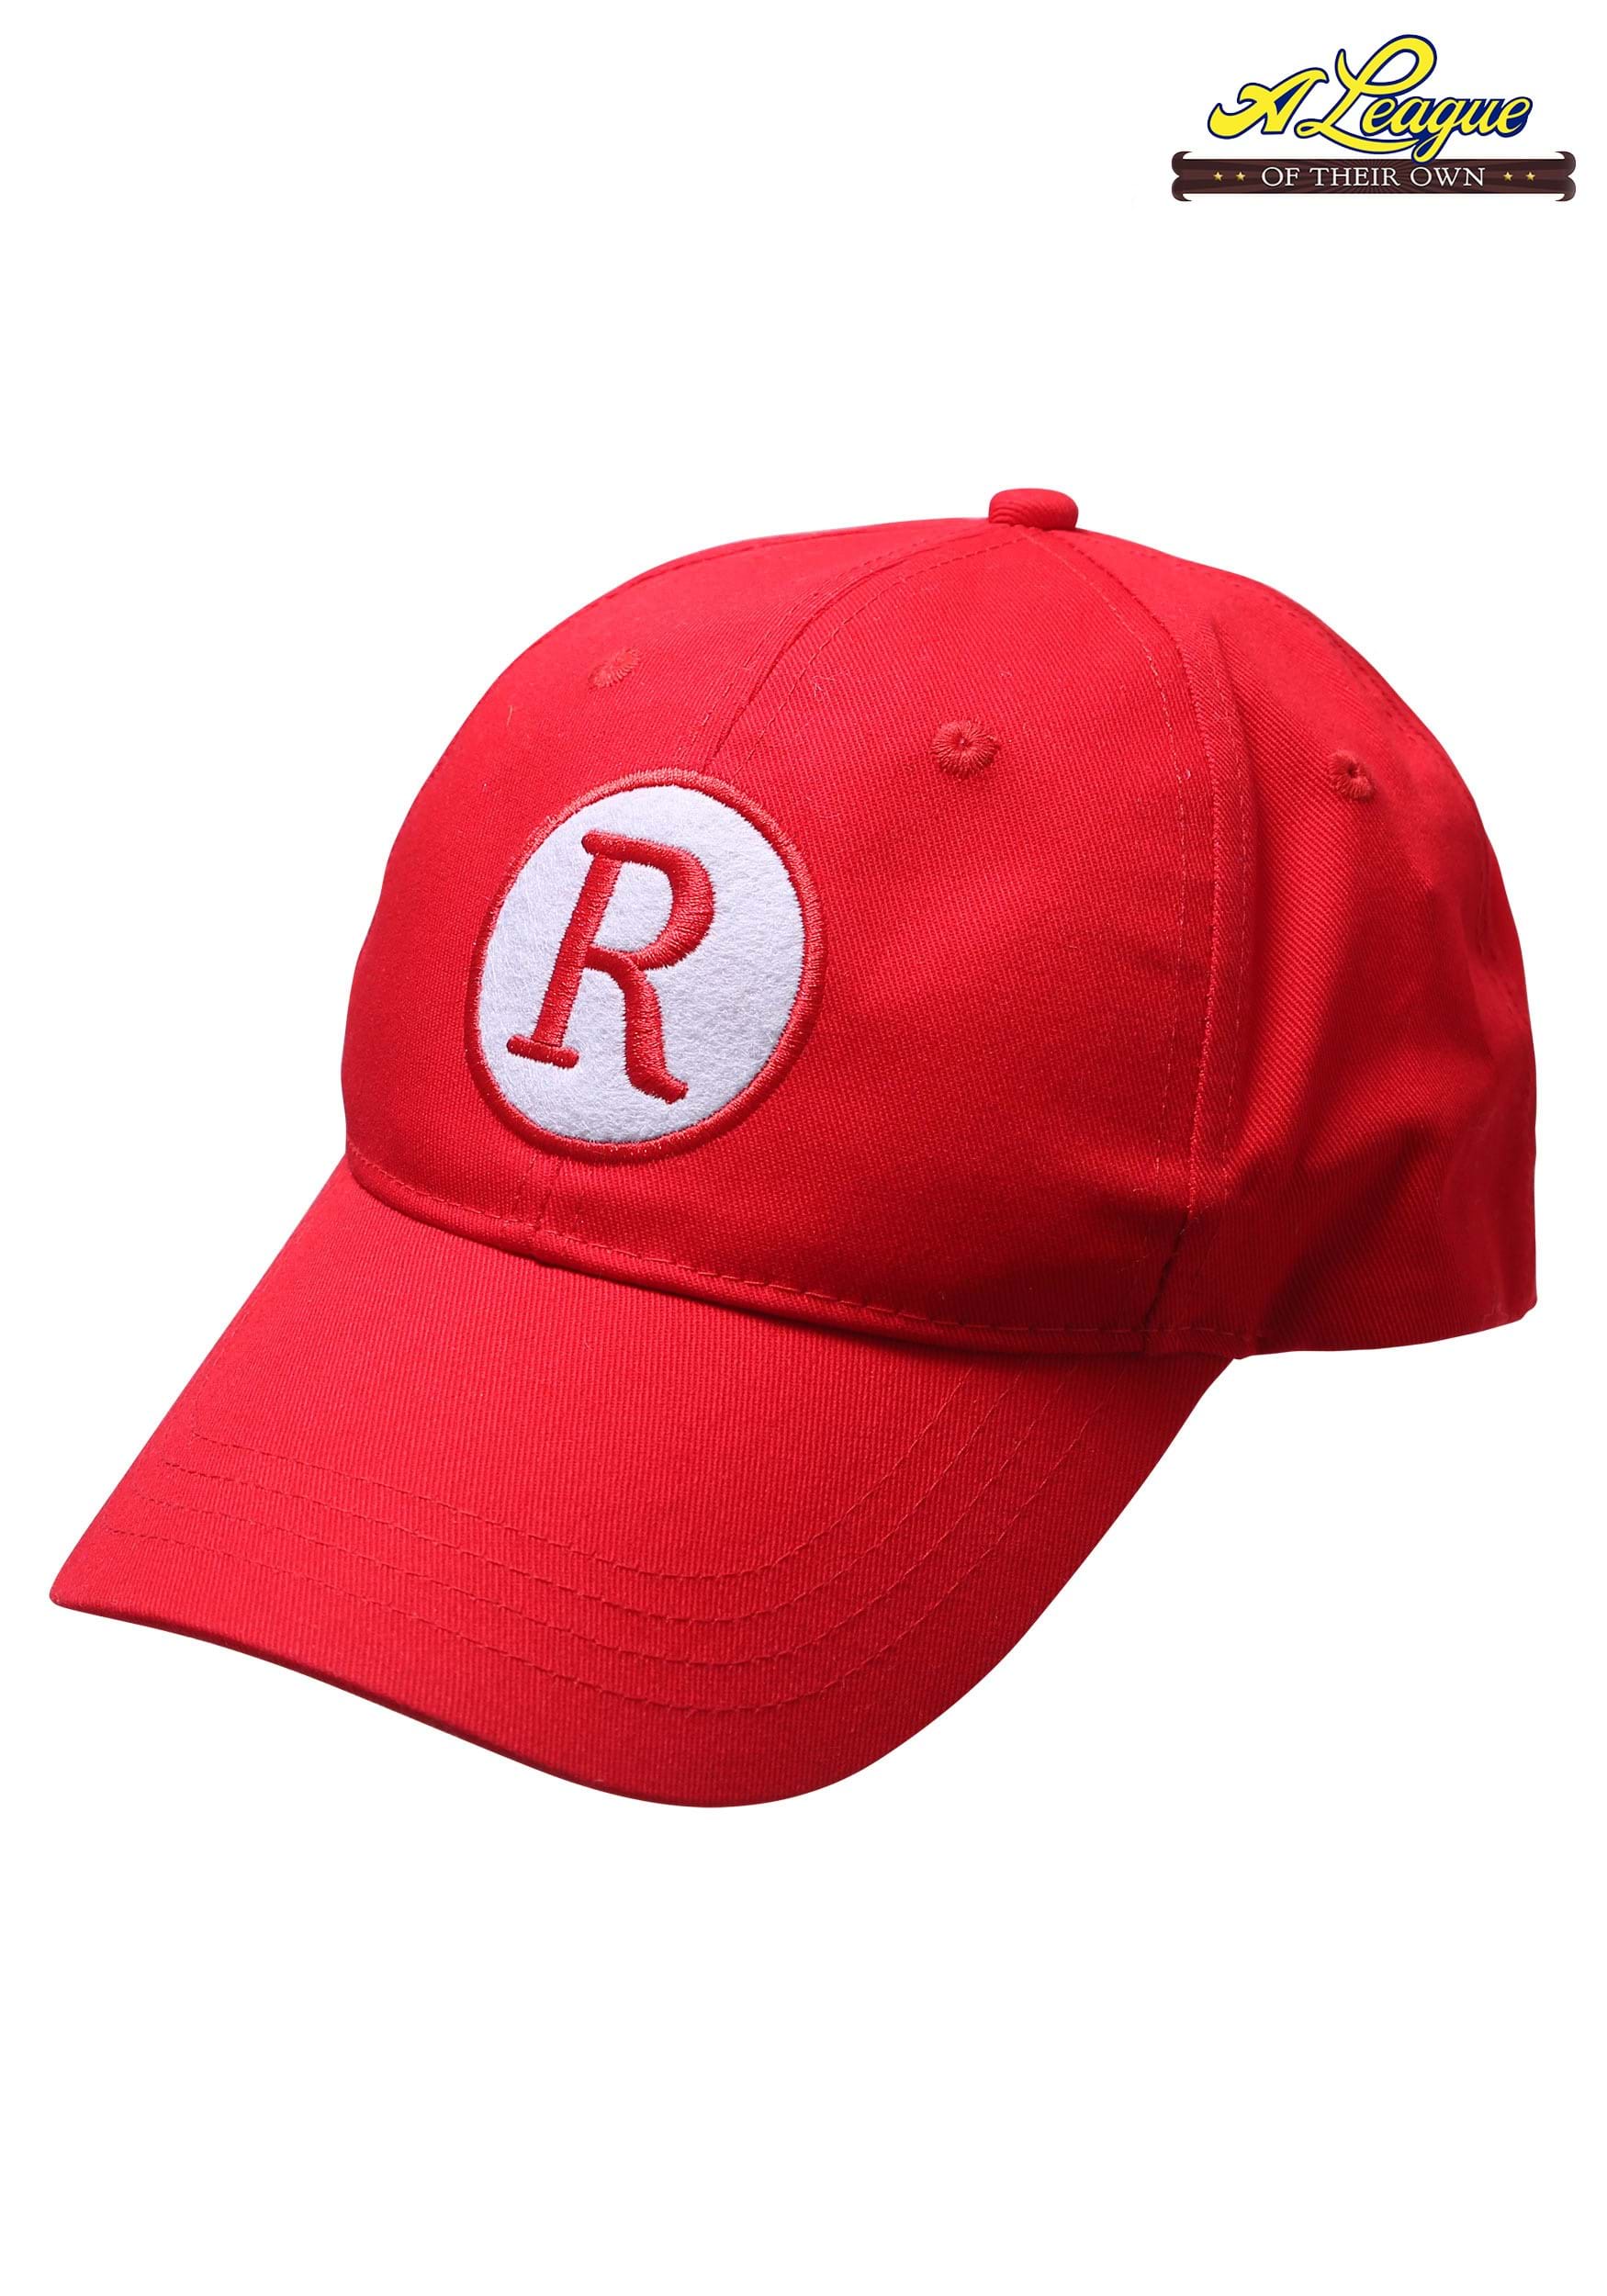 Rockford Peaches Hat - New Ball cap